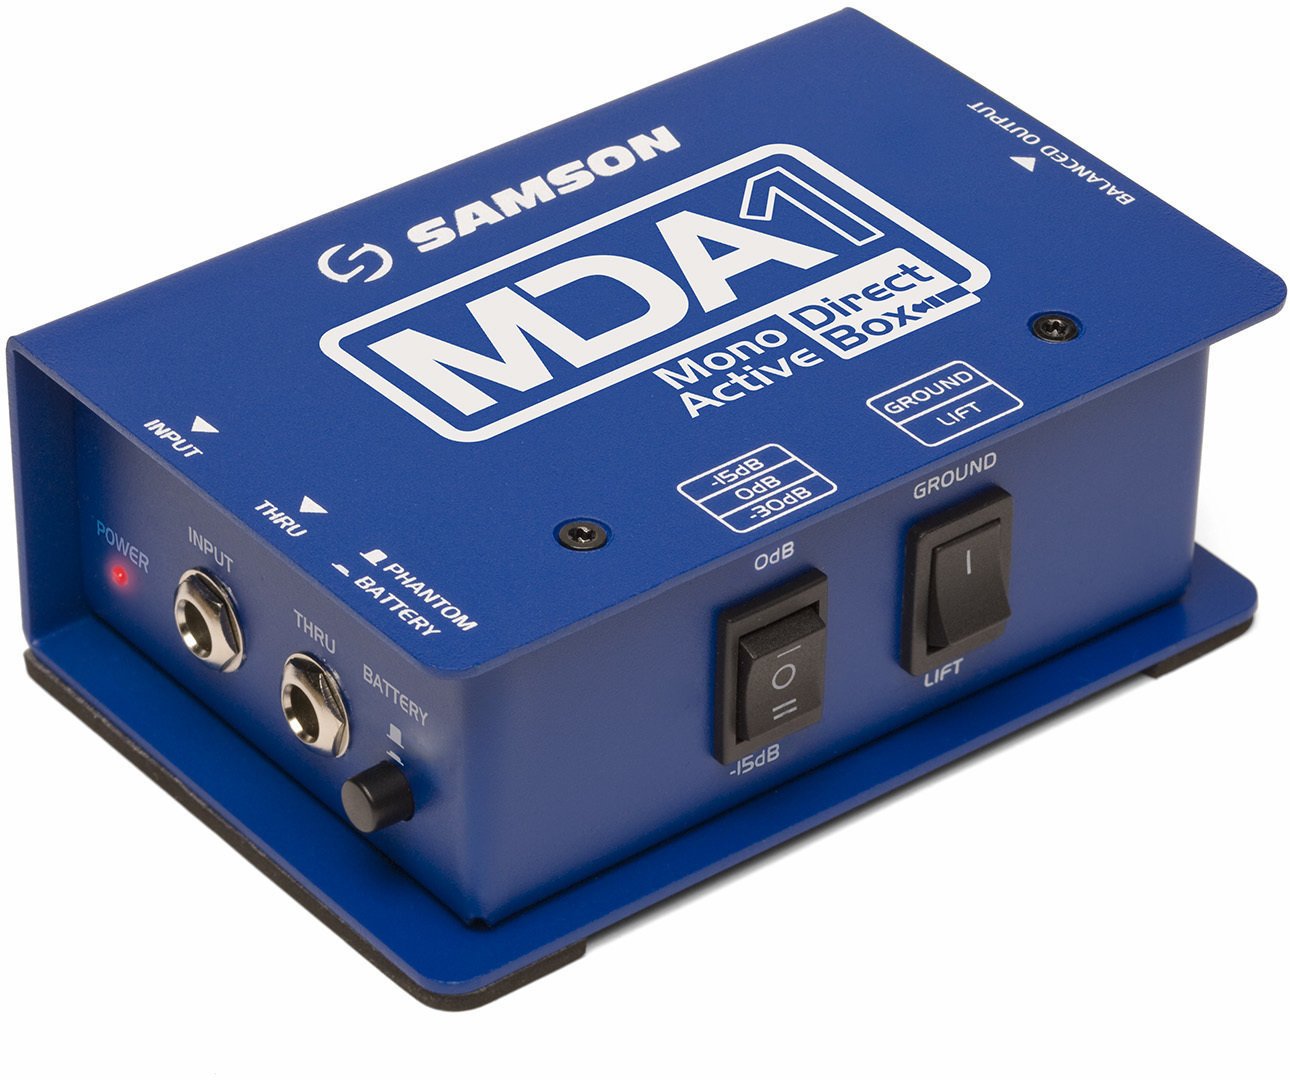 Soundprozessor, Sound Processor Samson MDA1